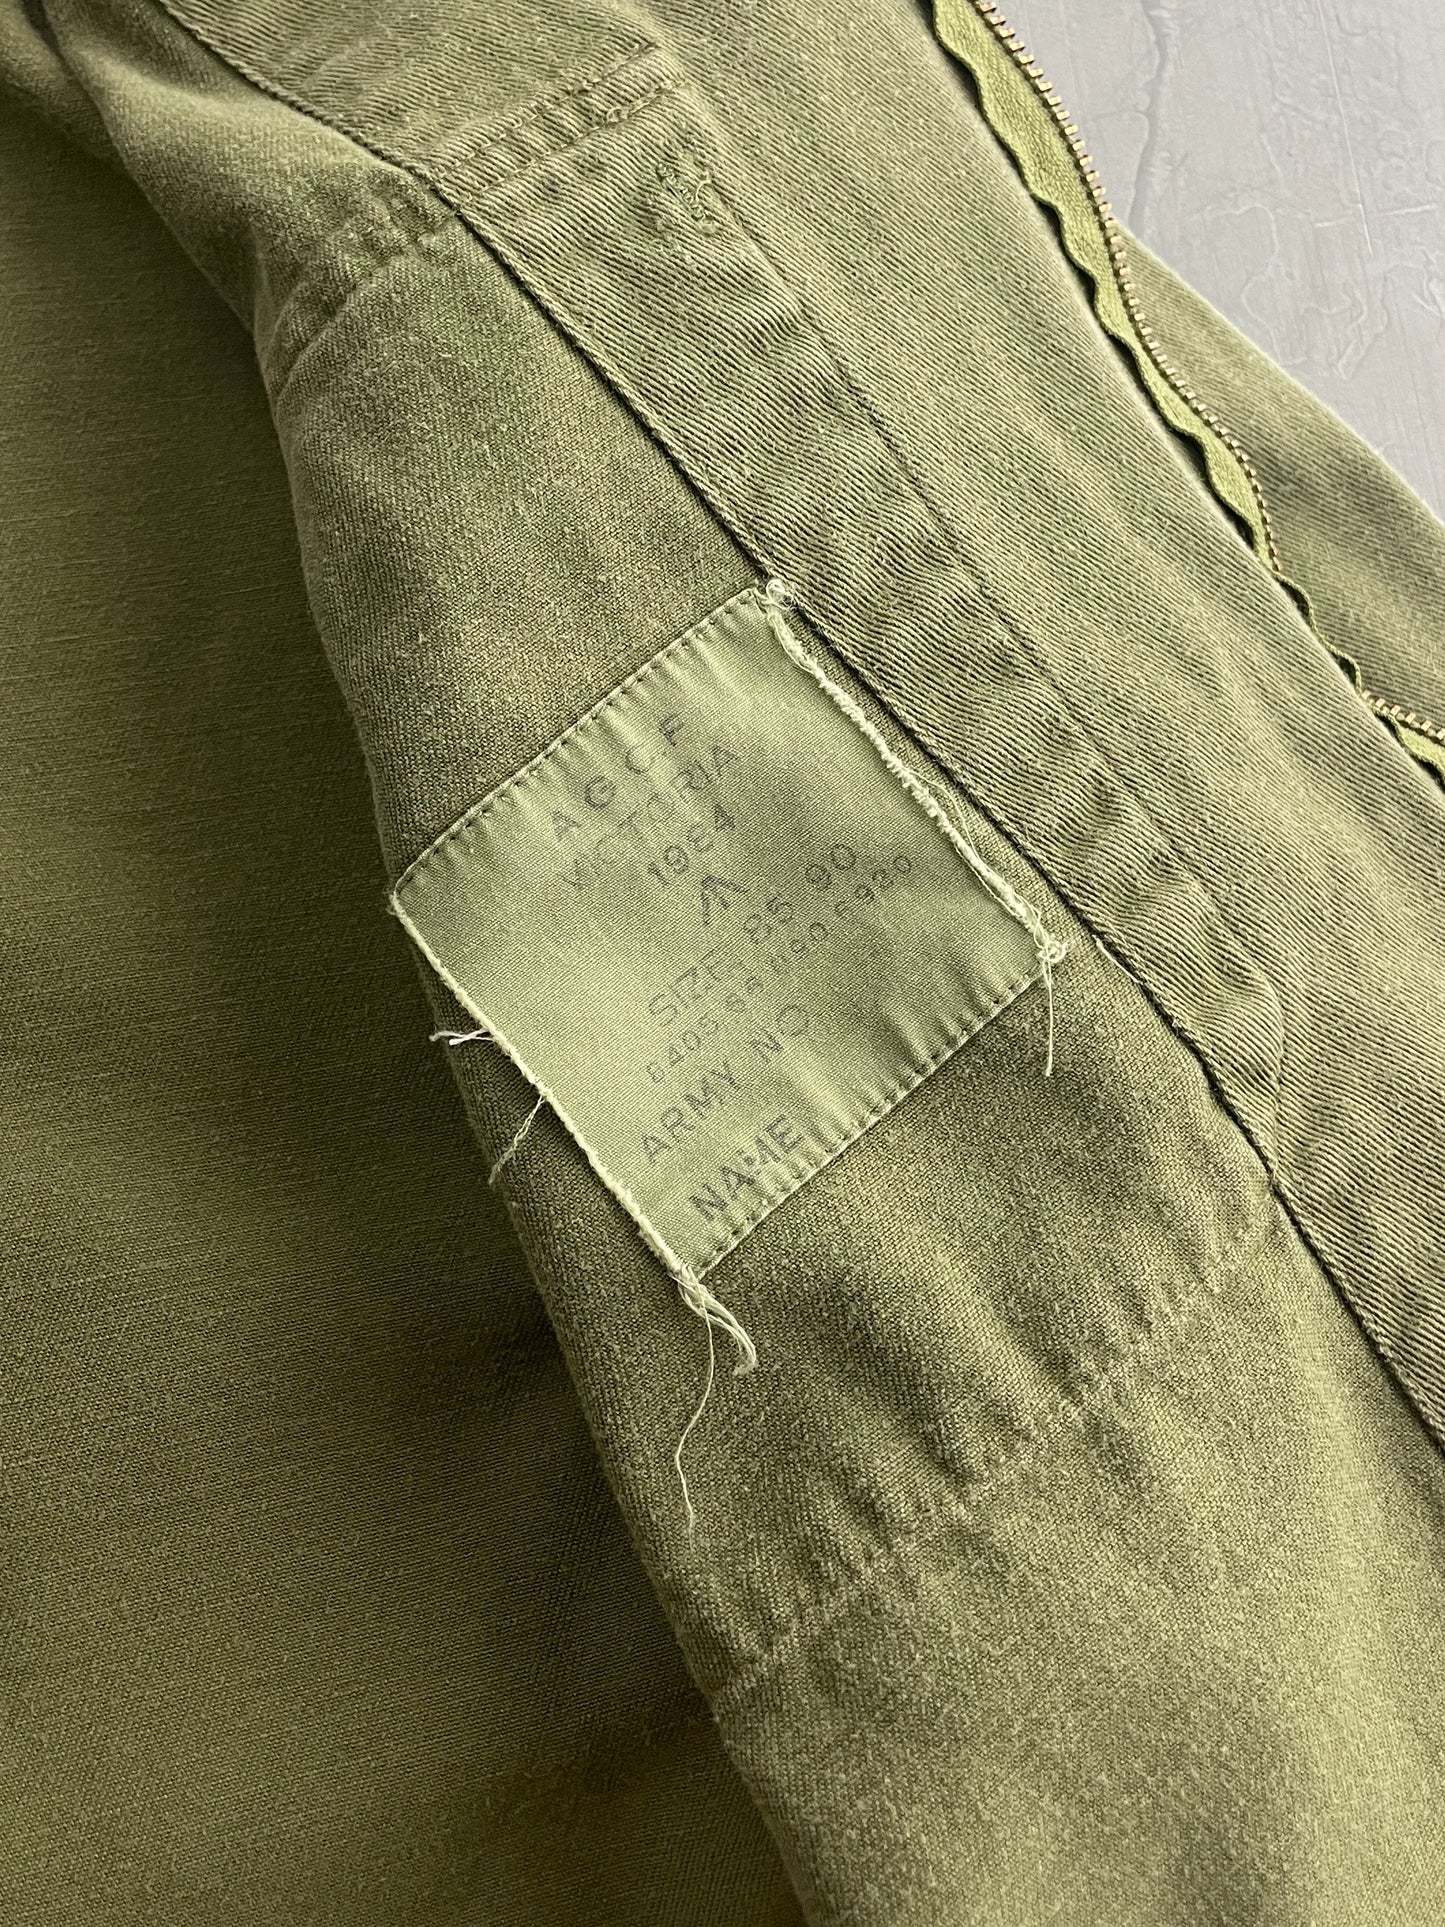 Aus Military Zip Jacket [S]